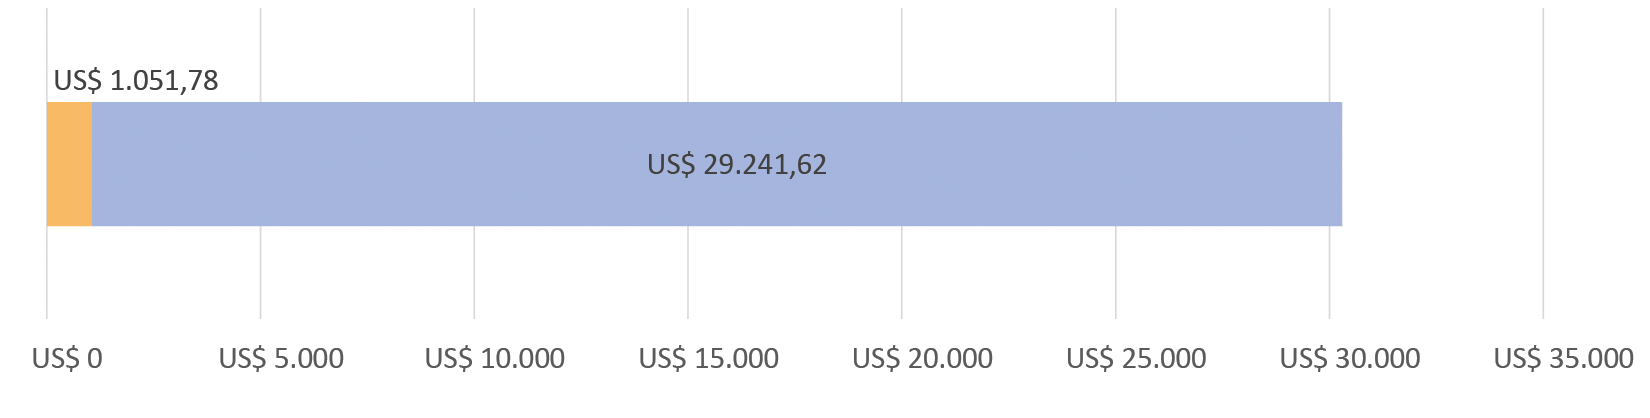 US$1.051,78 gastos; US$29.241,62 restantes